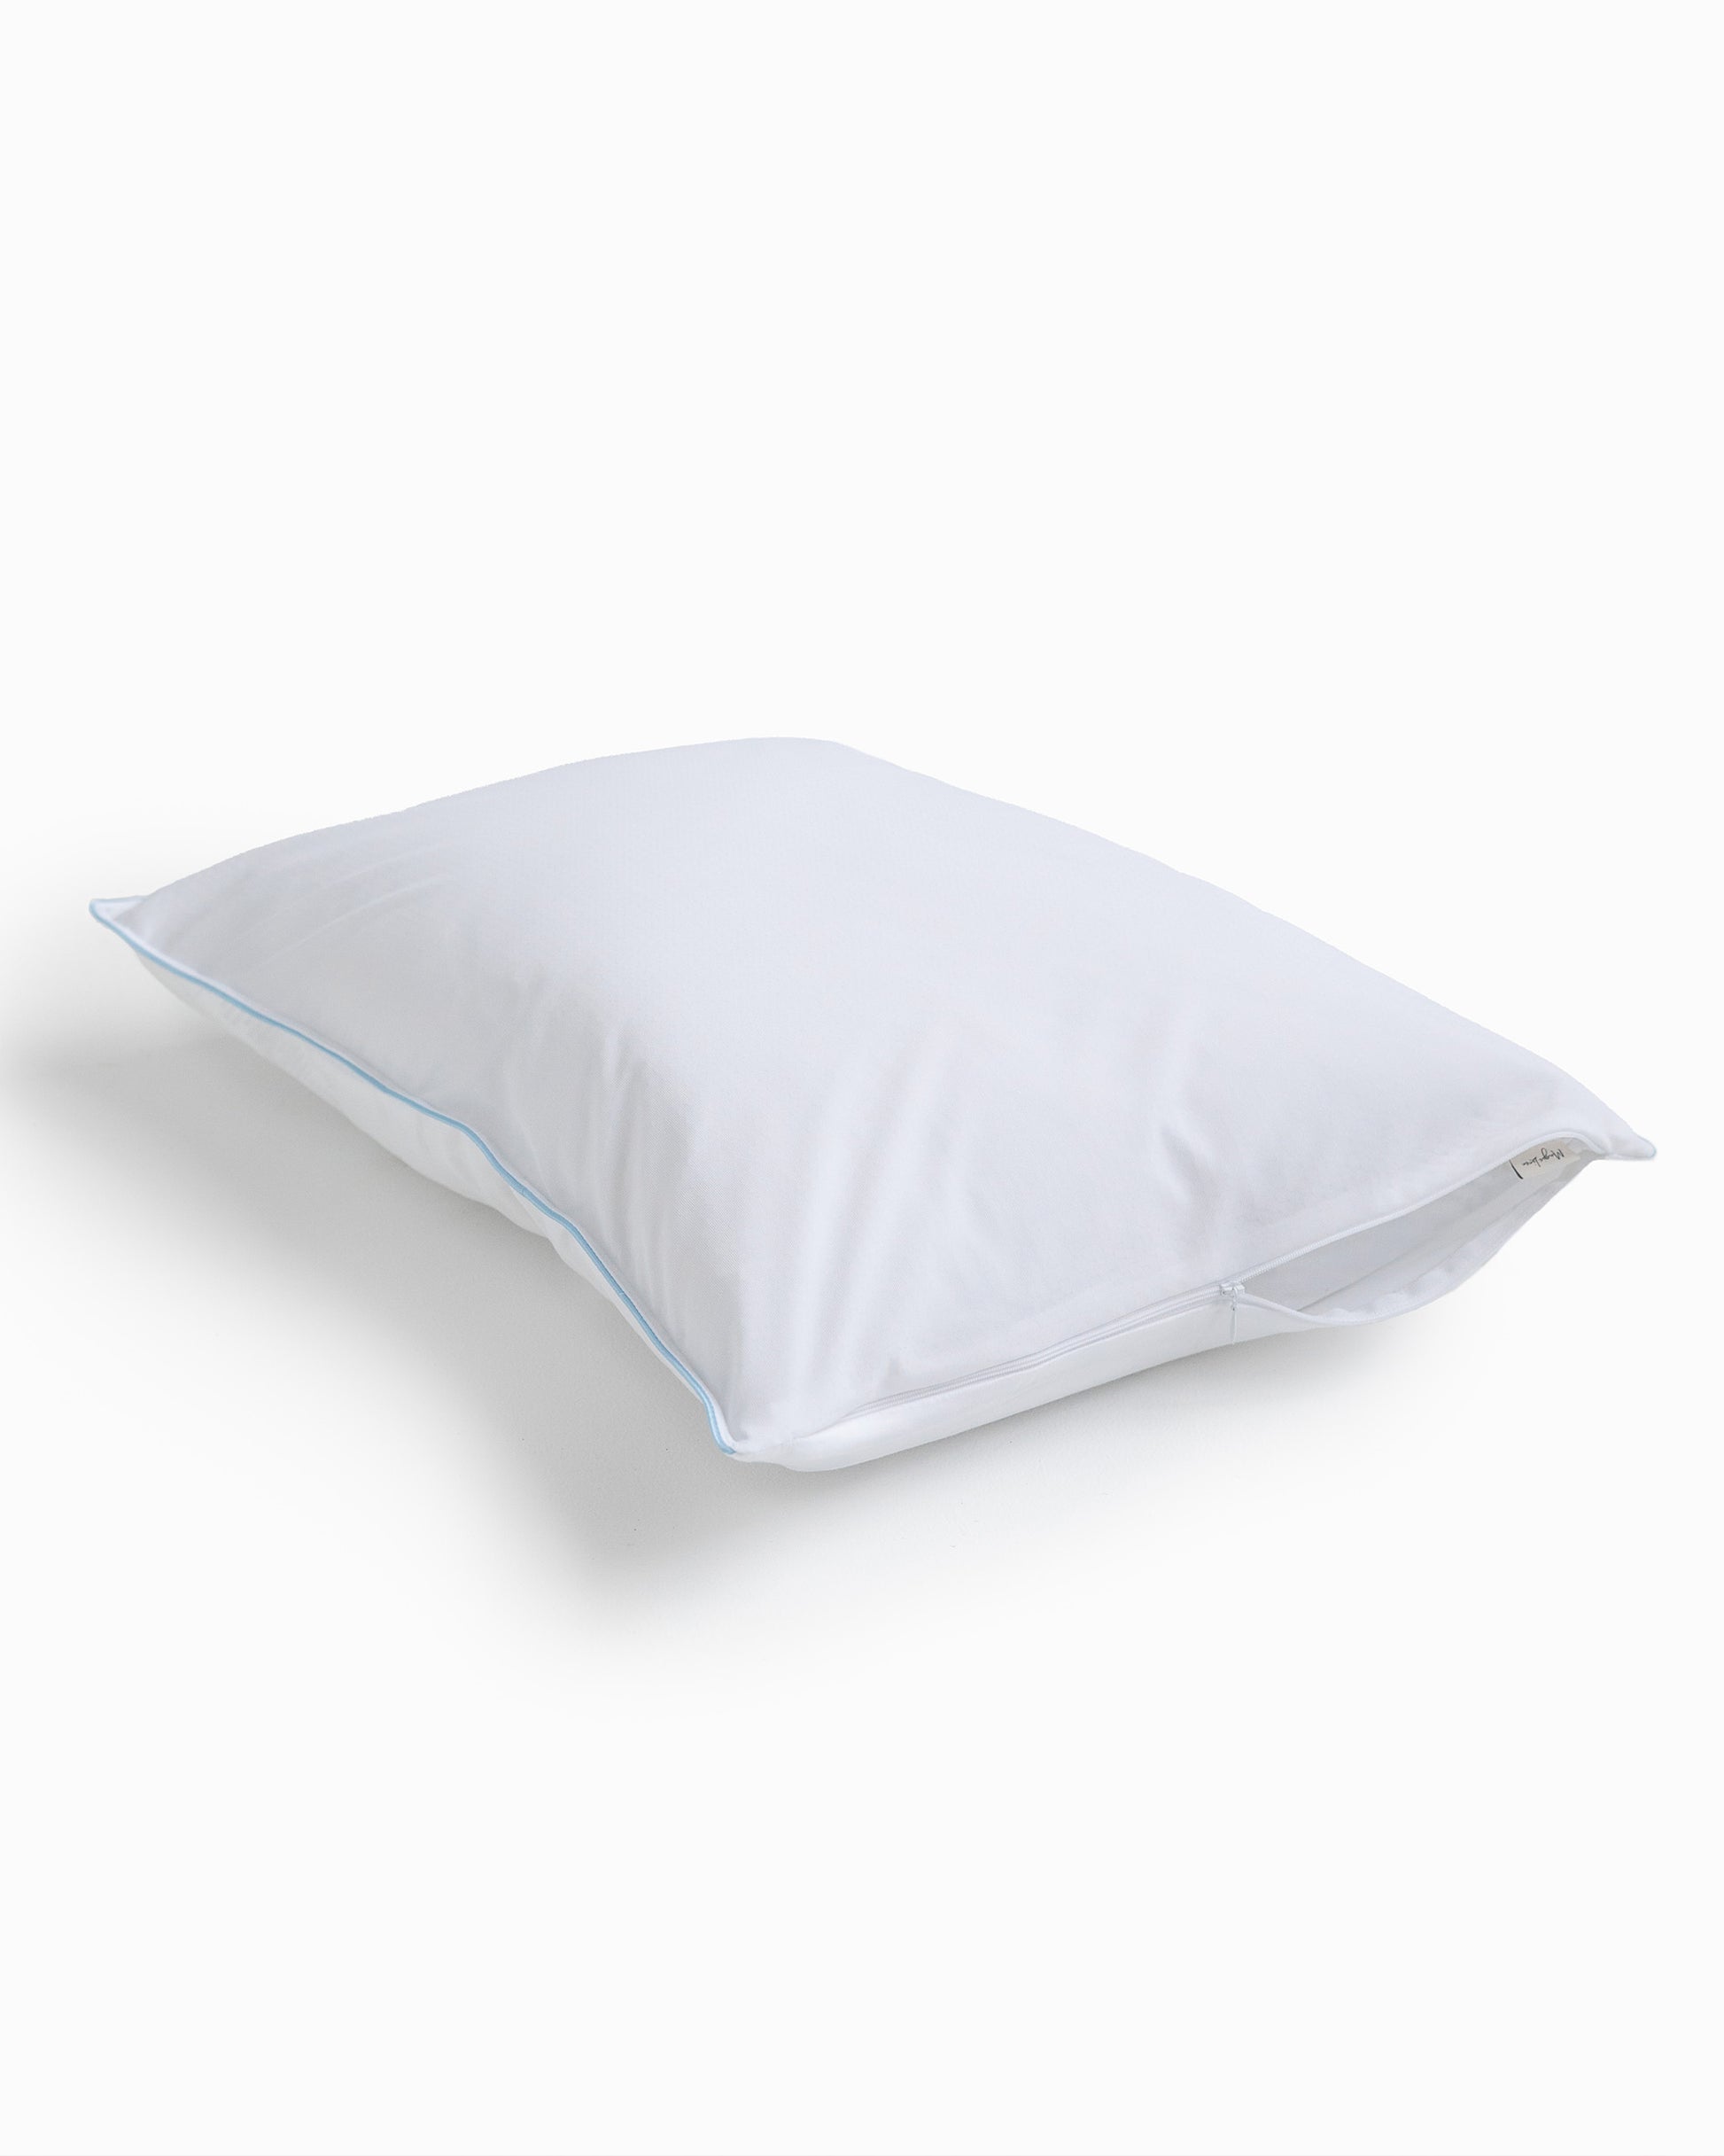 Down Pillow Protector - MagicLinen